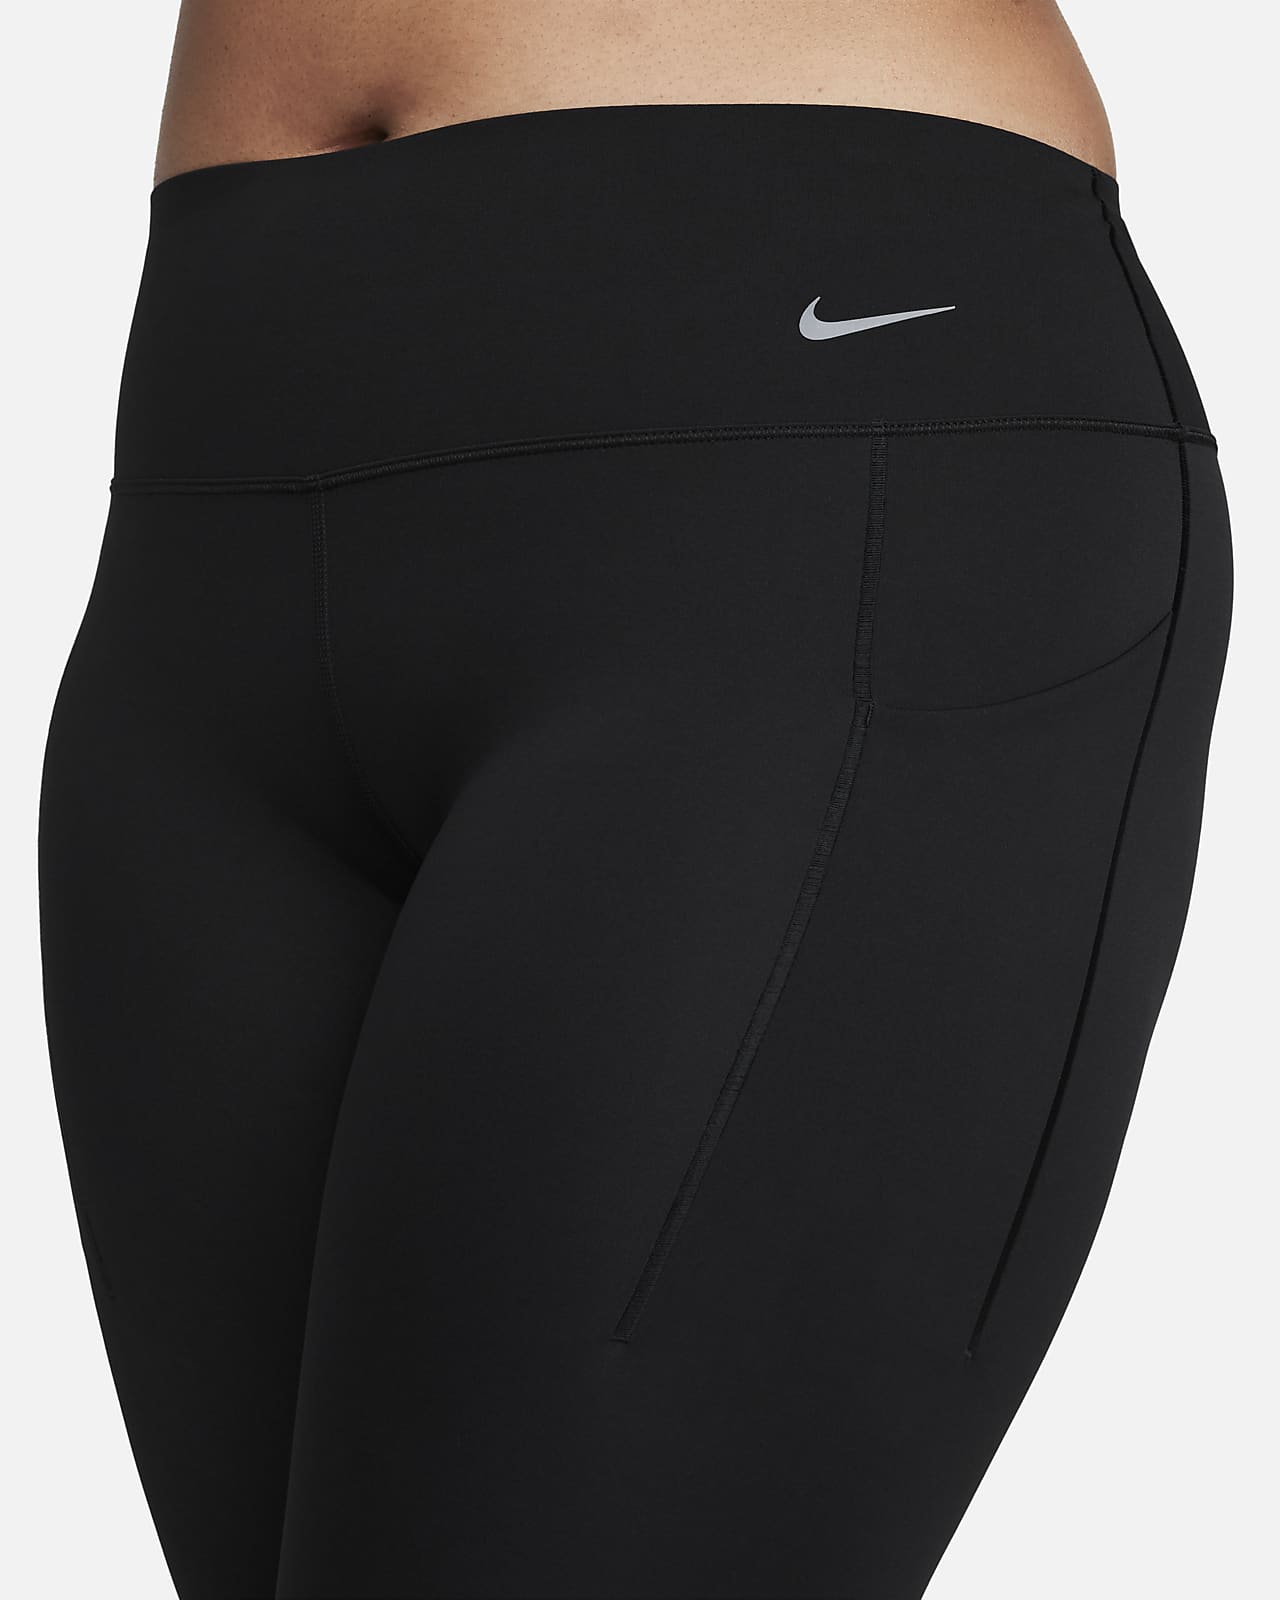 zonde binnen Medaille Nike Universa Women's Medium-Support Mid-Rise 7/8 Leggings with Pockets.  Nike.com